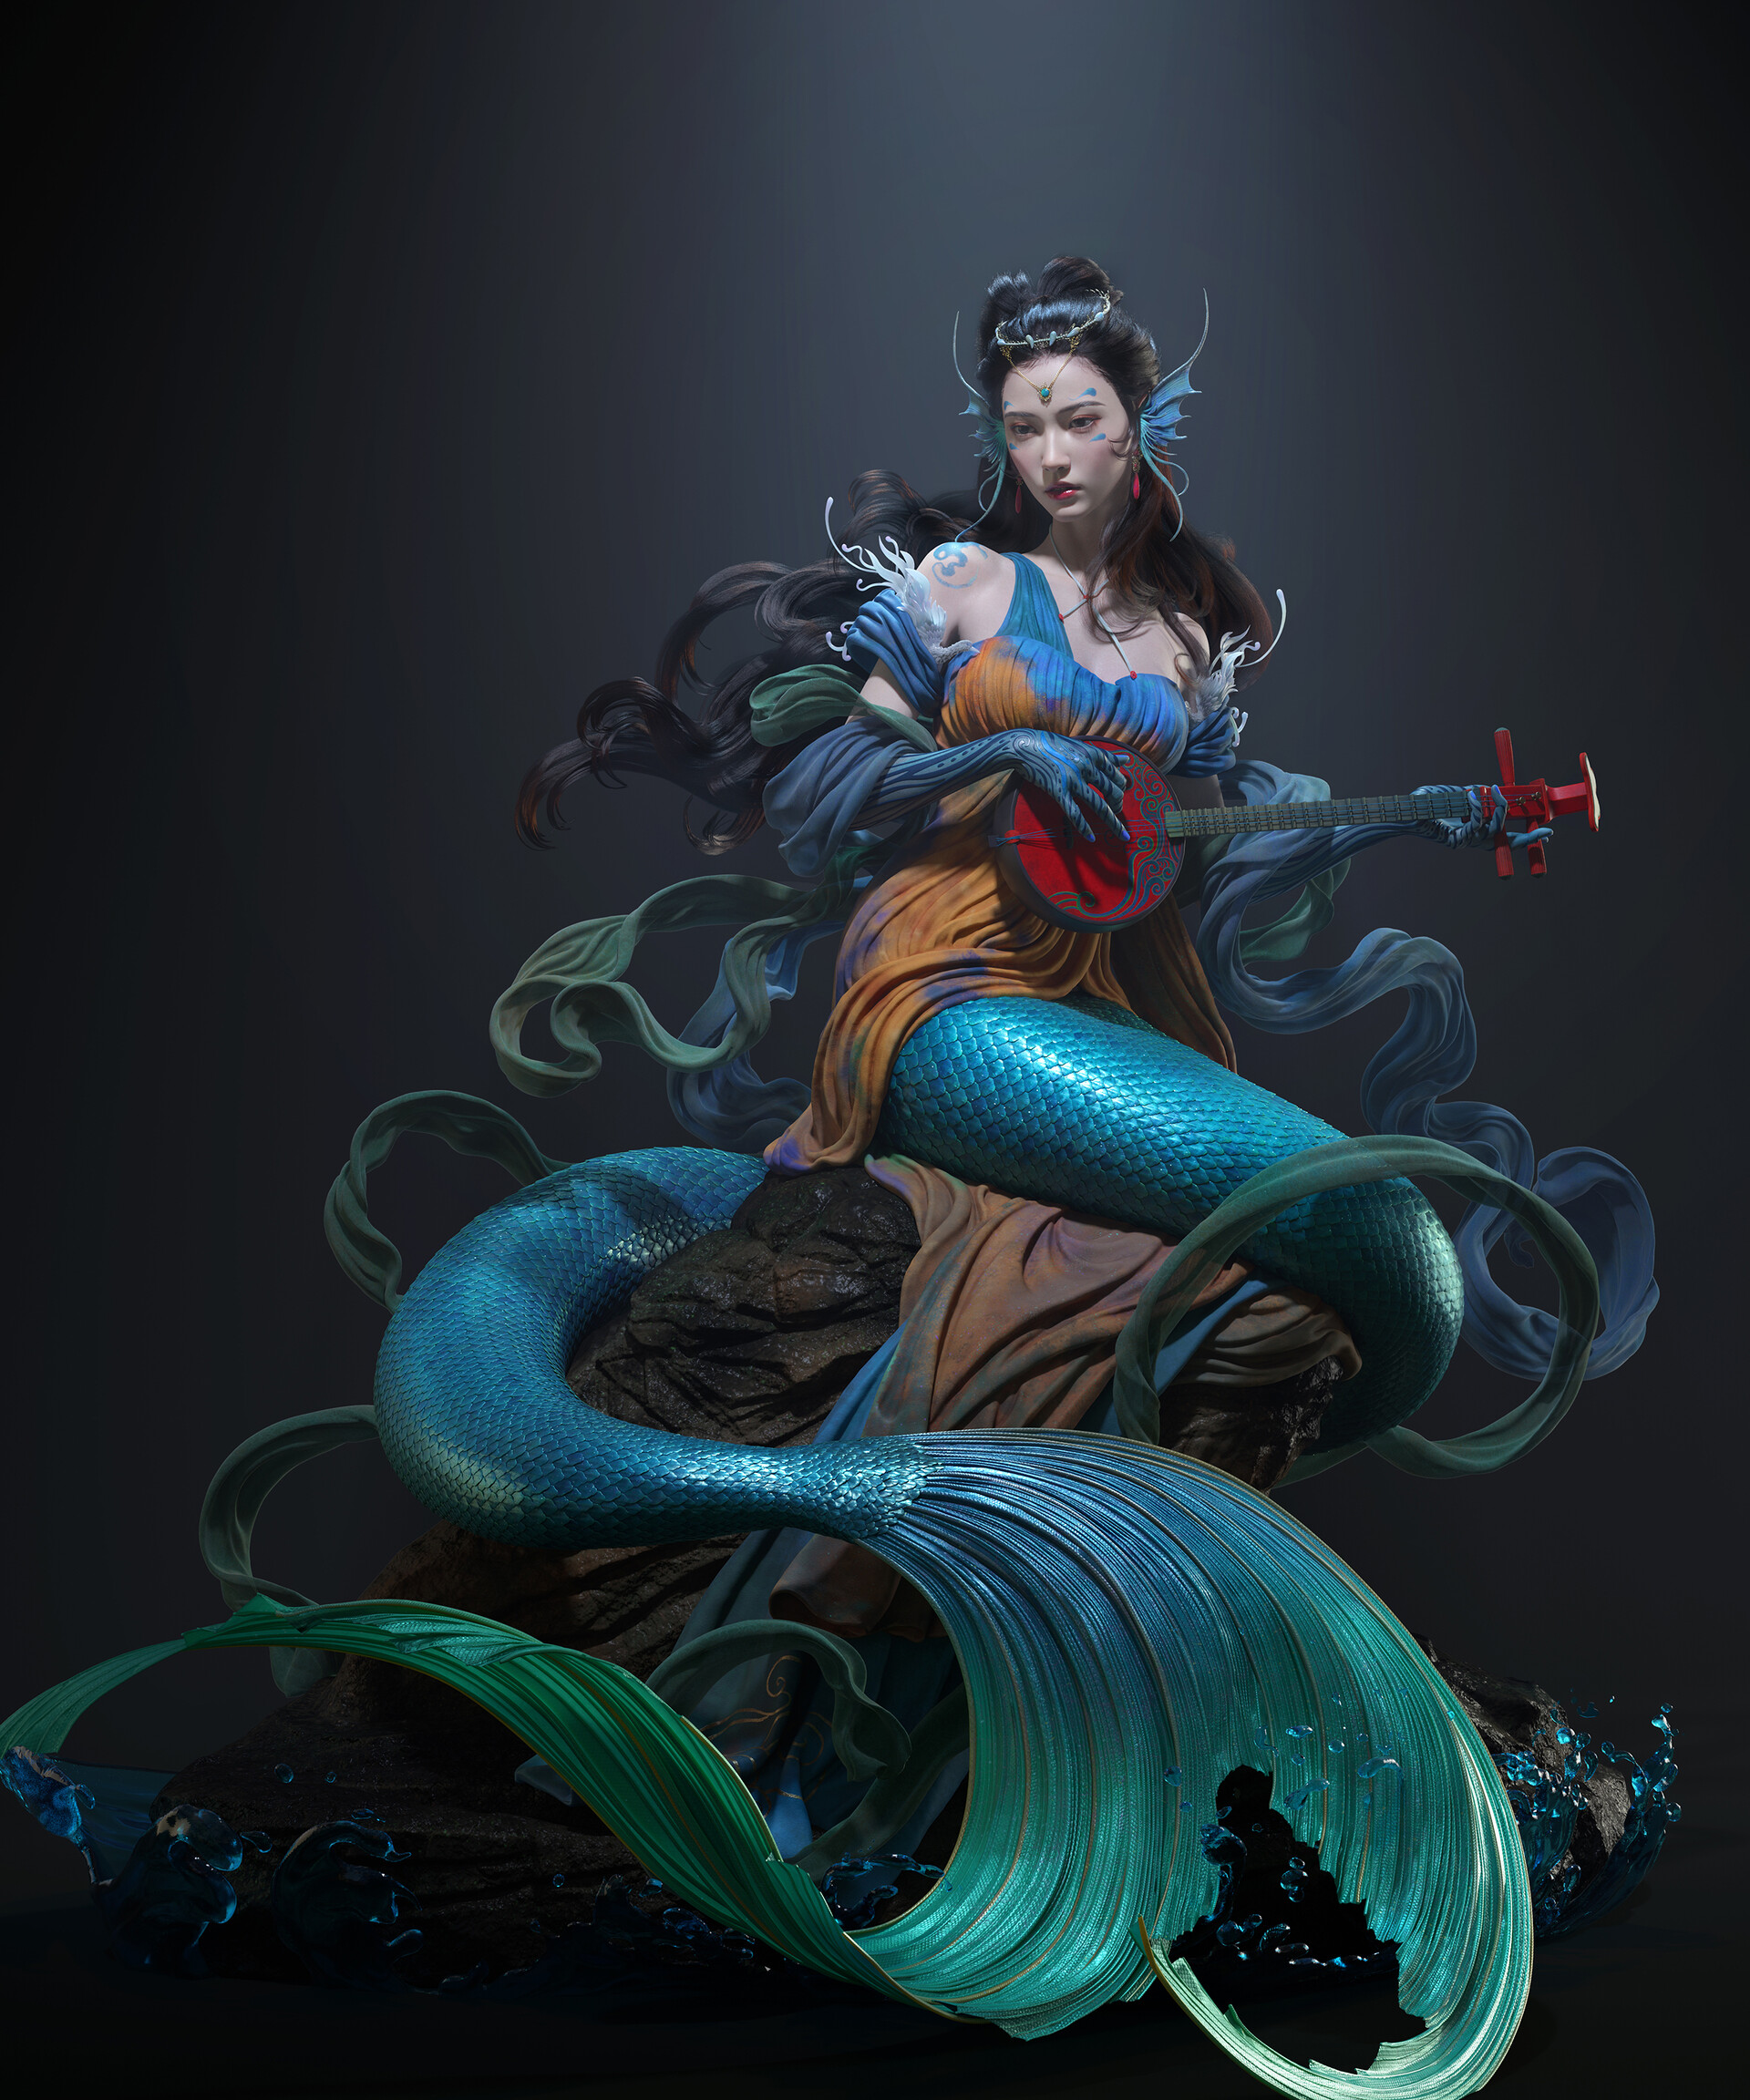 General 1920x2304 Qi Sheng Luo CGI mermaids lute fantasy art tail portrait display digital art simple background